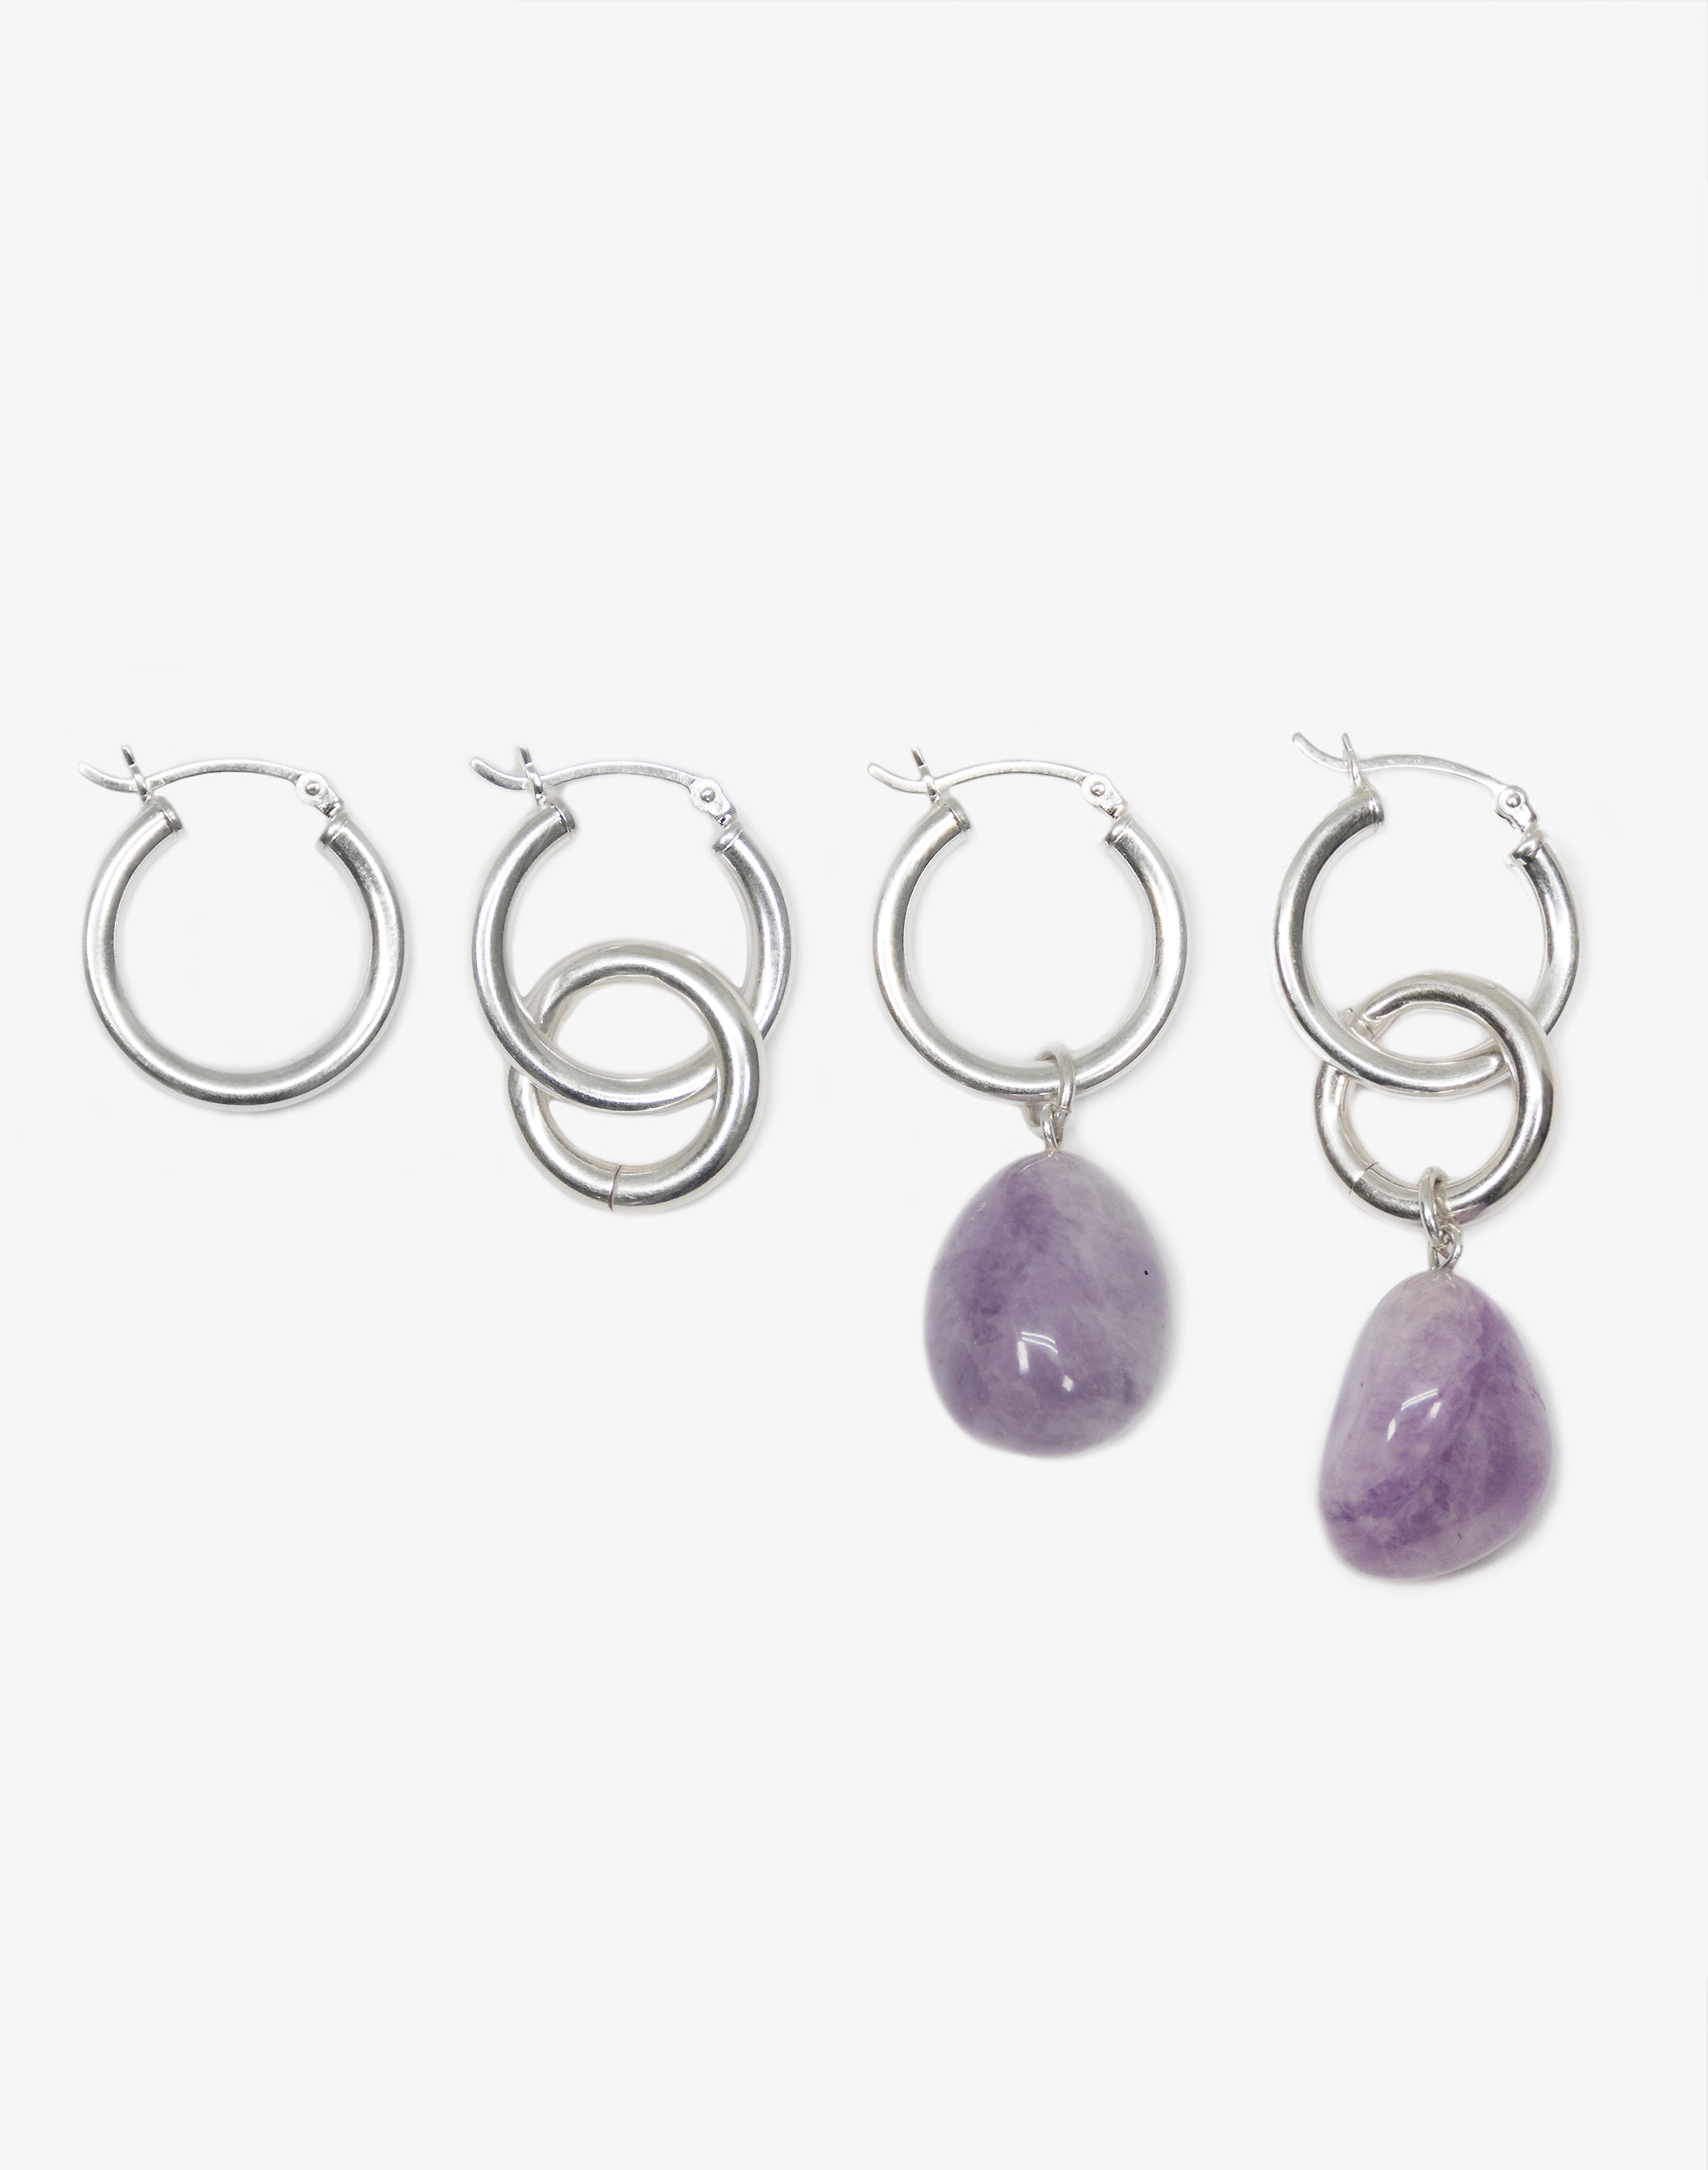 llayers Silver stones hoops earrings Made in Brooklyn New York